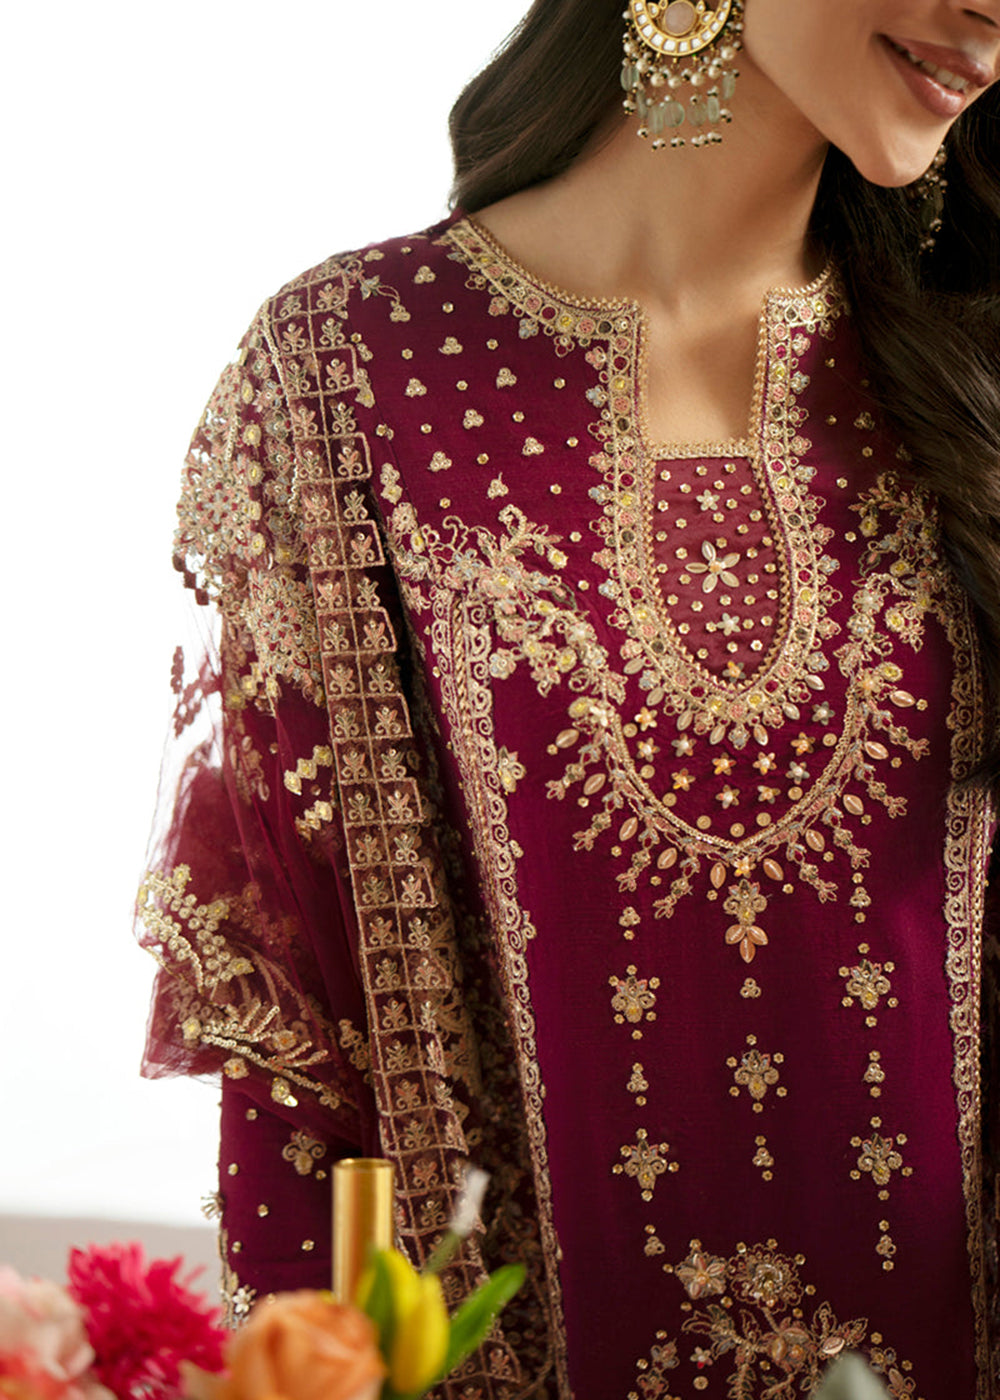 Buy Now Dilnaaz Wedding Formals 2023 by Qalamkar | DN-07 - ALEENA Online in USA, UK, Canada & Worldwide at Empress Clothing. 